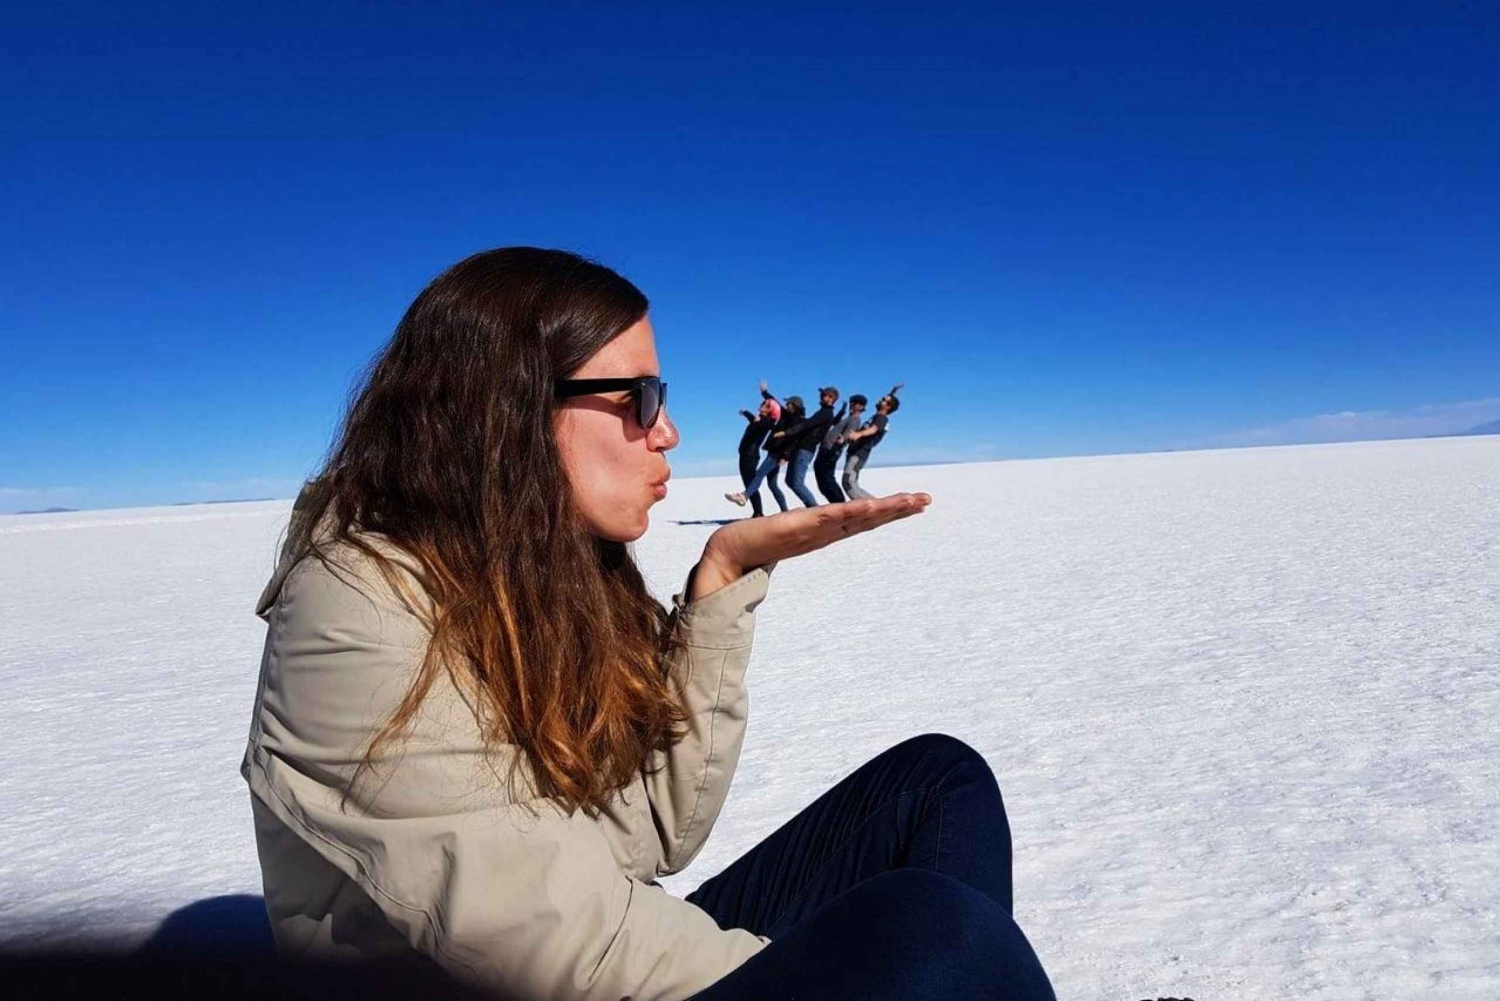 From San Pedro de Atacama: Uyuni Salt Flat 4-Days